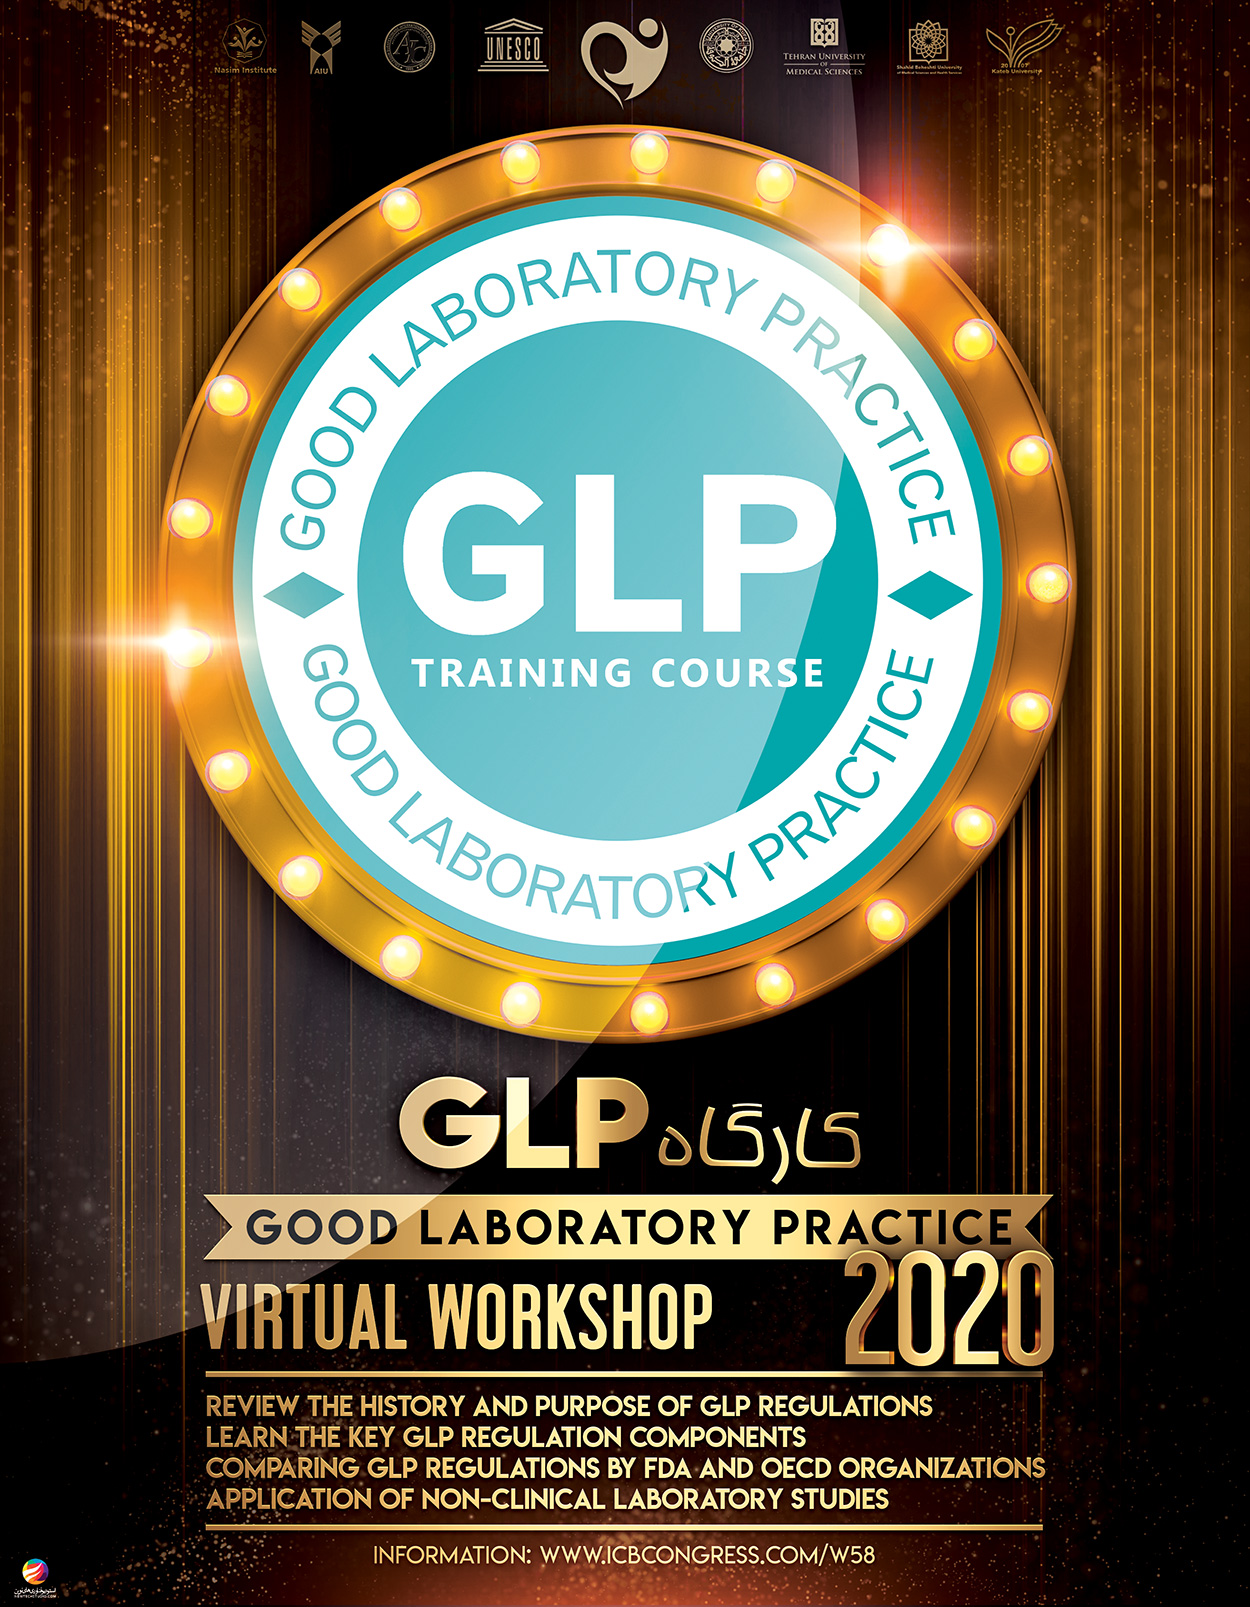 Good Laboratory Practice (GLP) Workshop